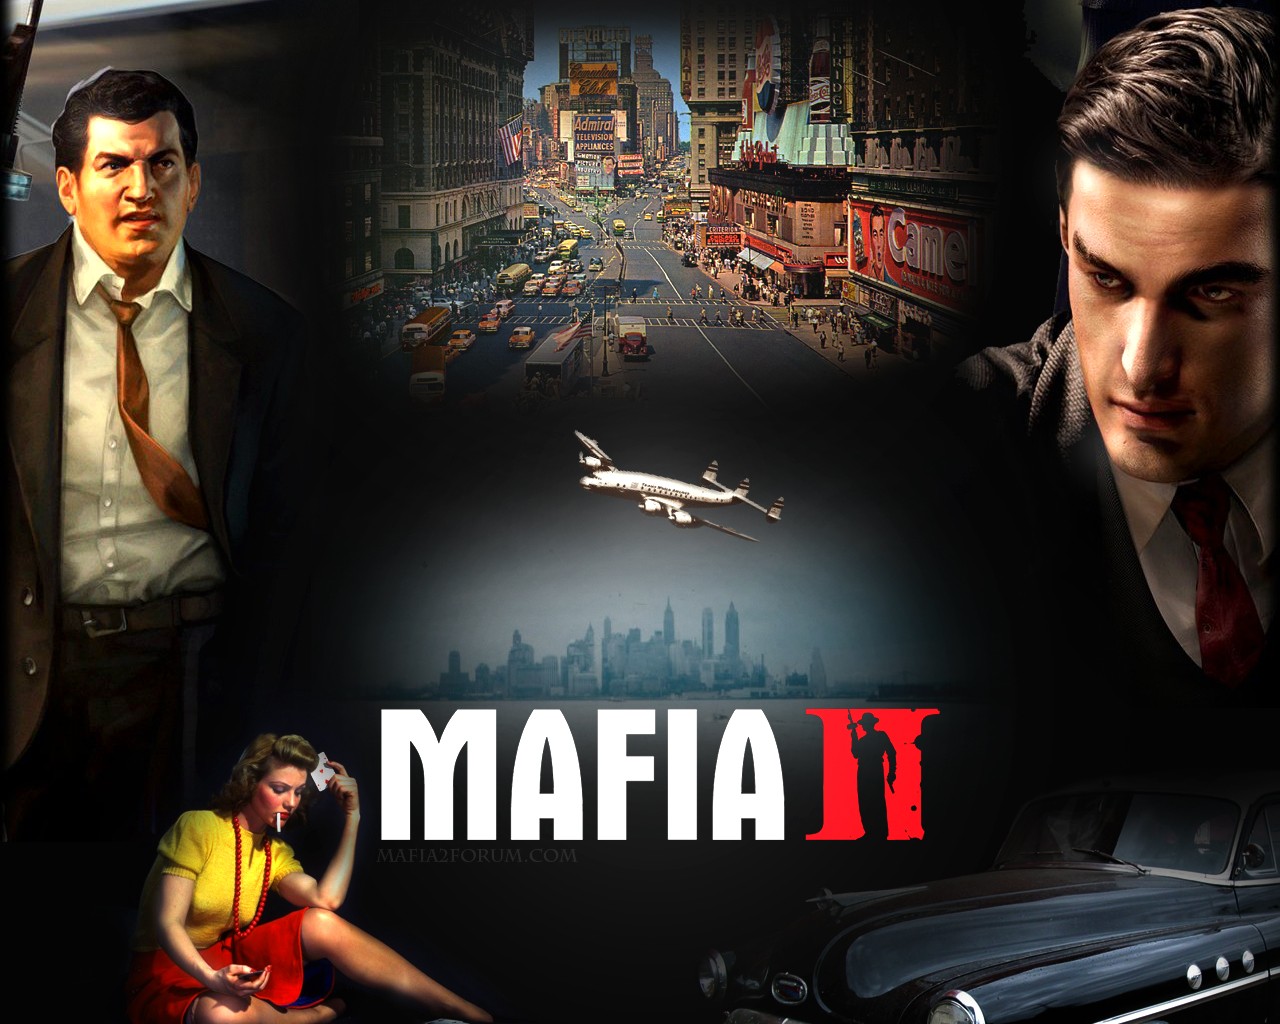 44+] Mafia 2 HD Wallpapers - WallpaperSafari